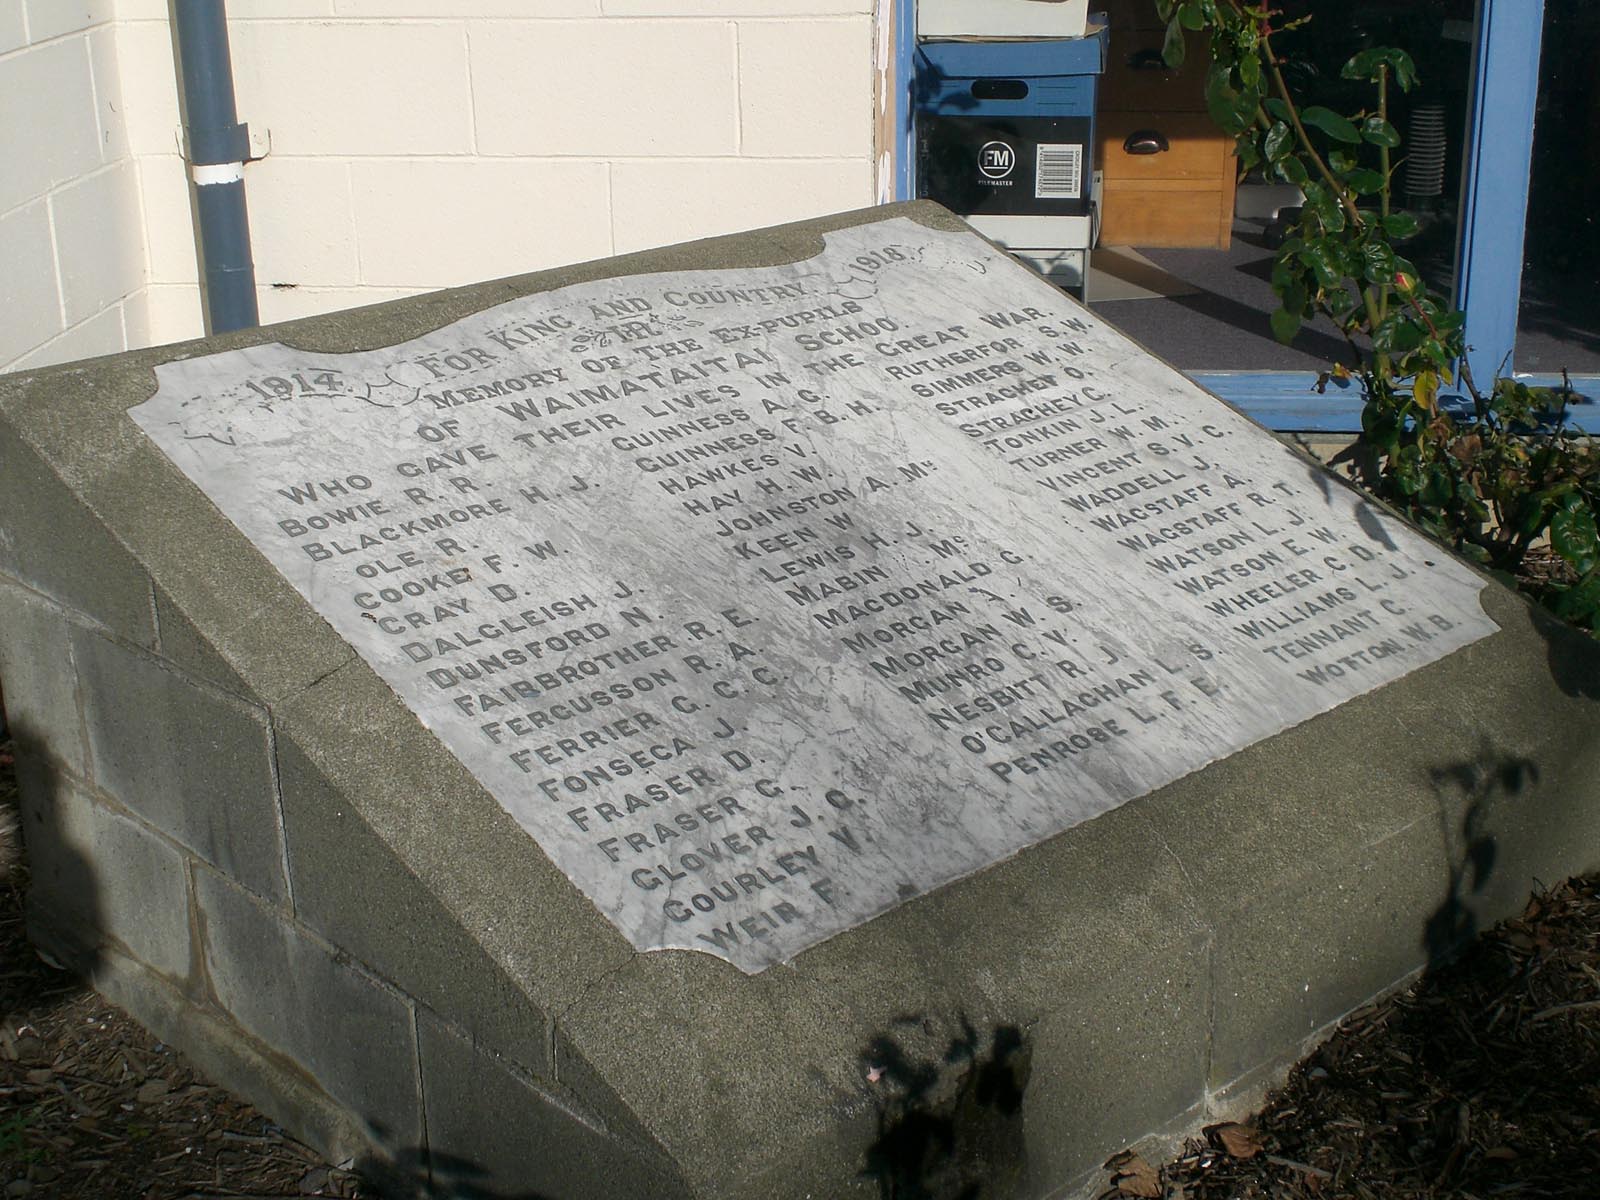 Waimataitai School War Memorial, pictured in 2007